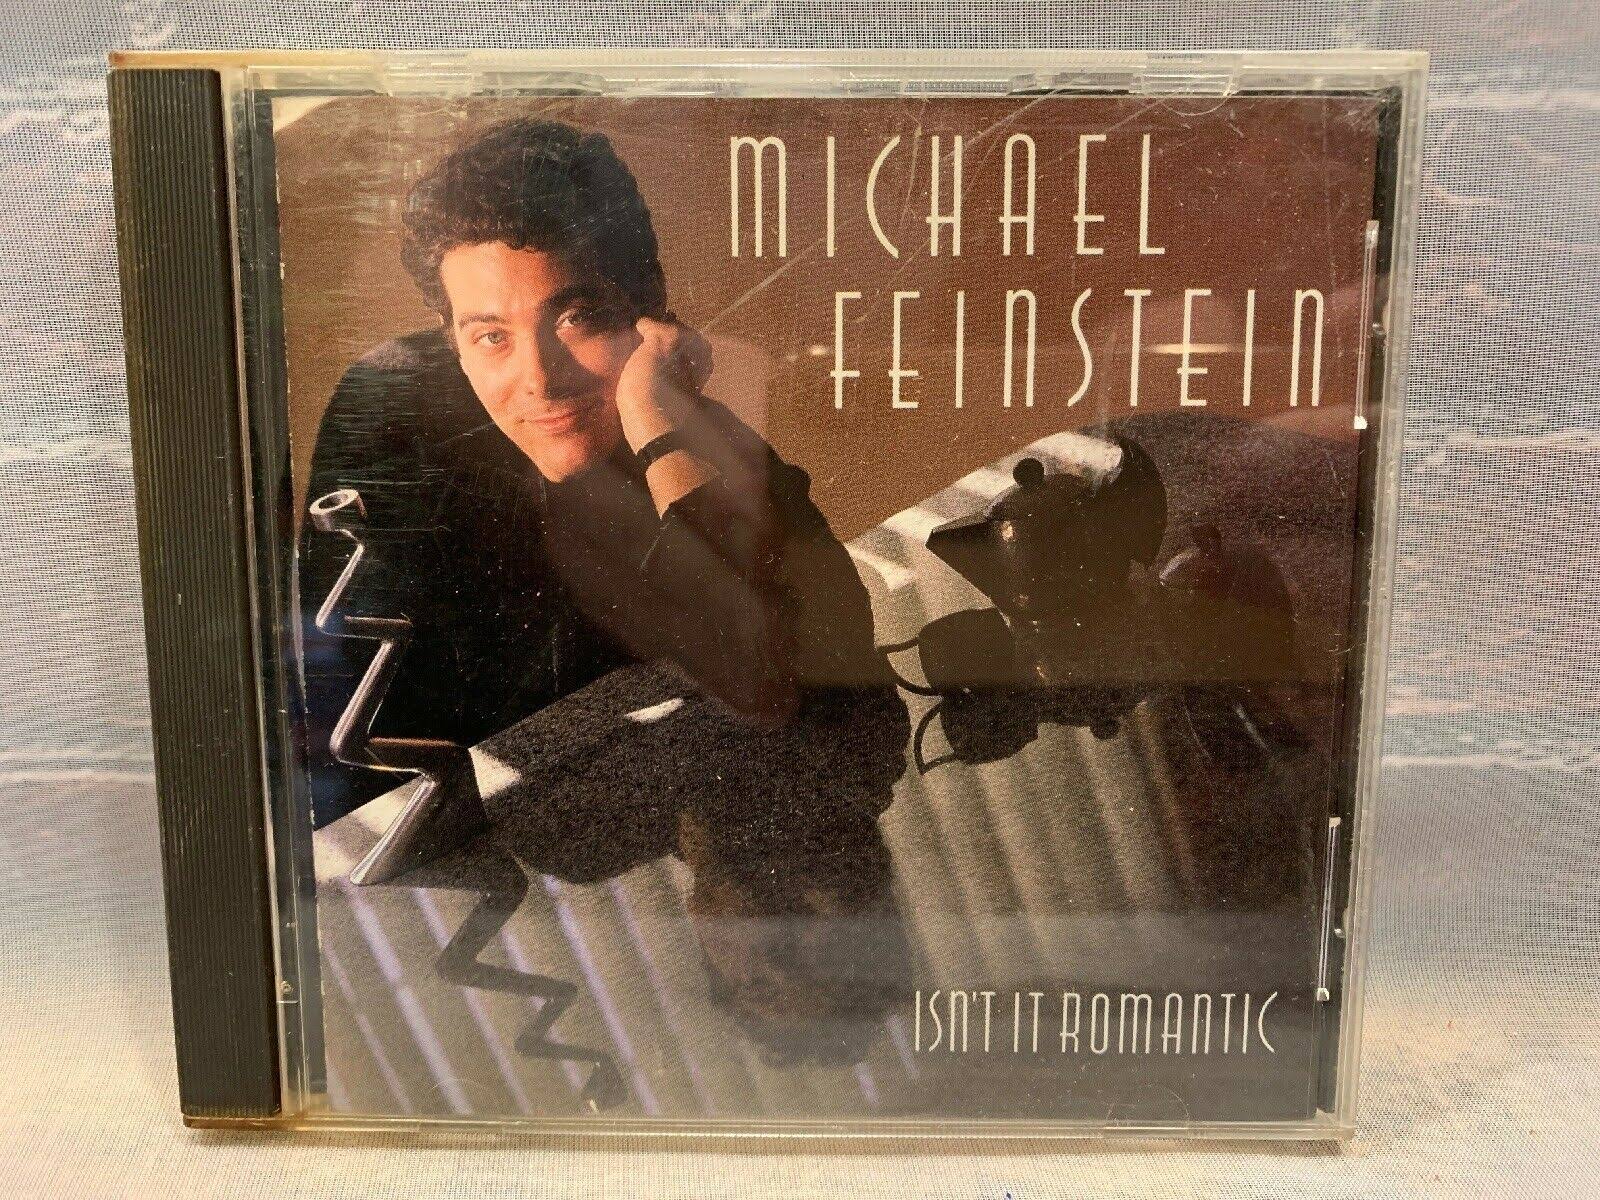 Isn't It Romantic - Michael Feinstein